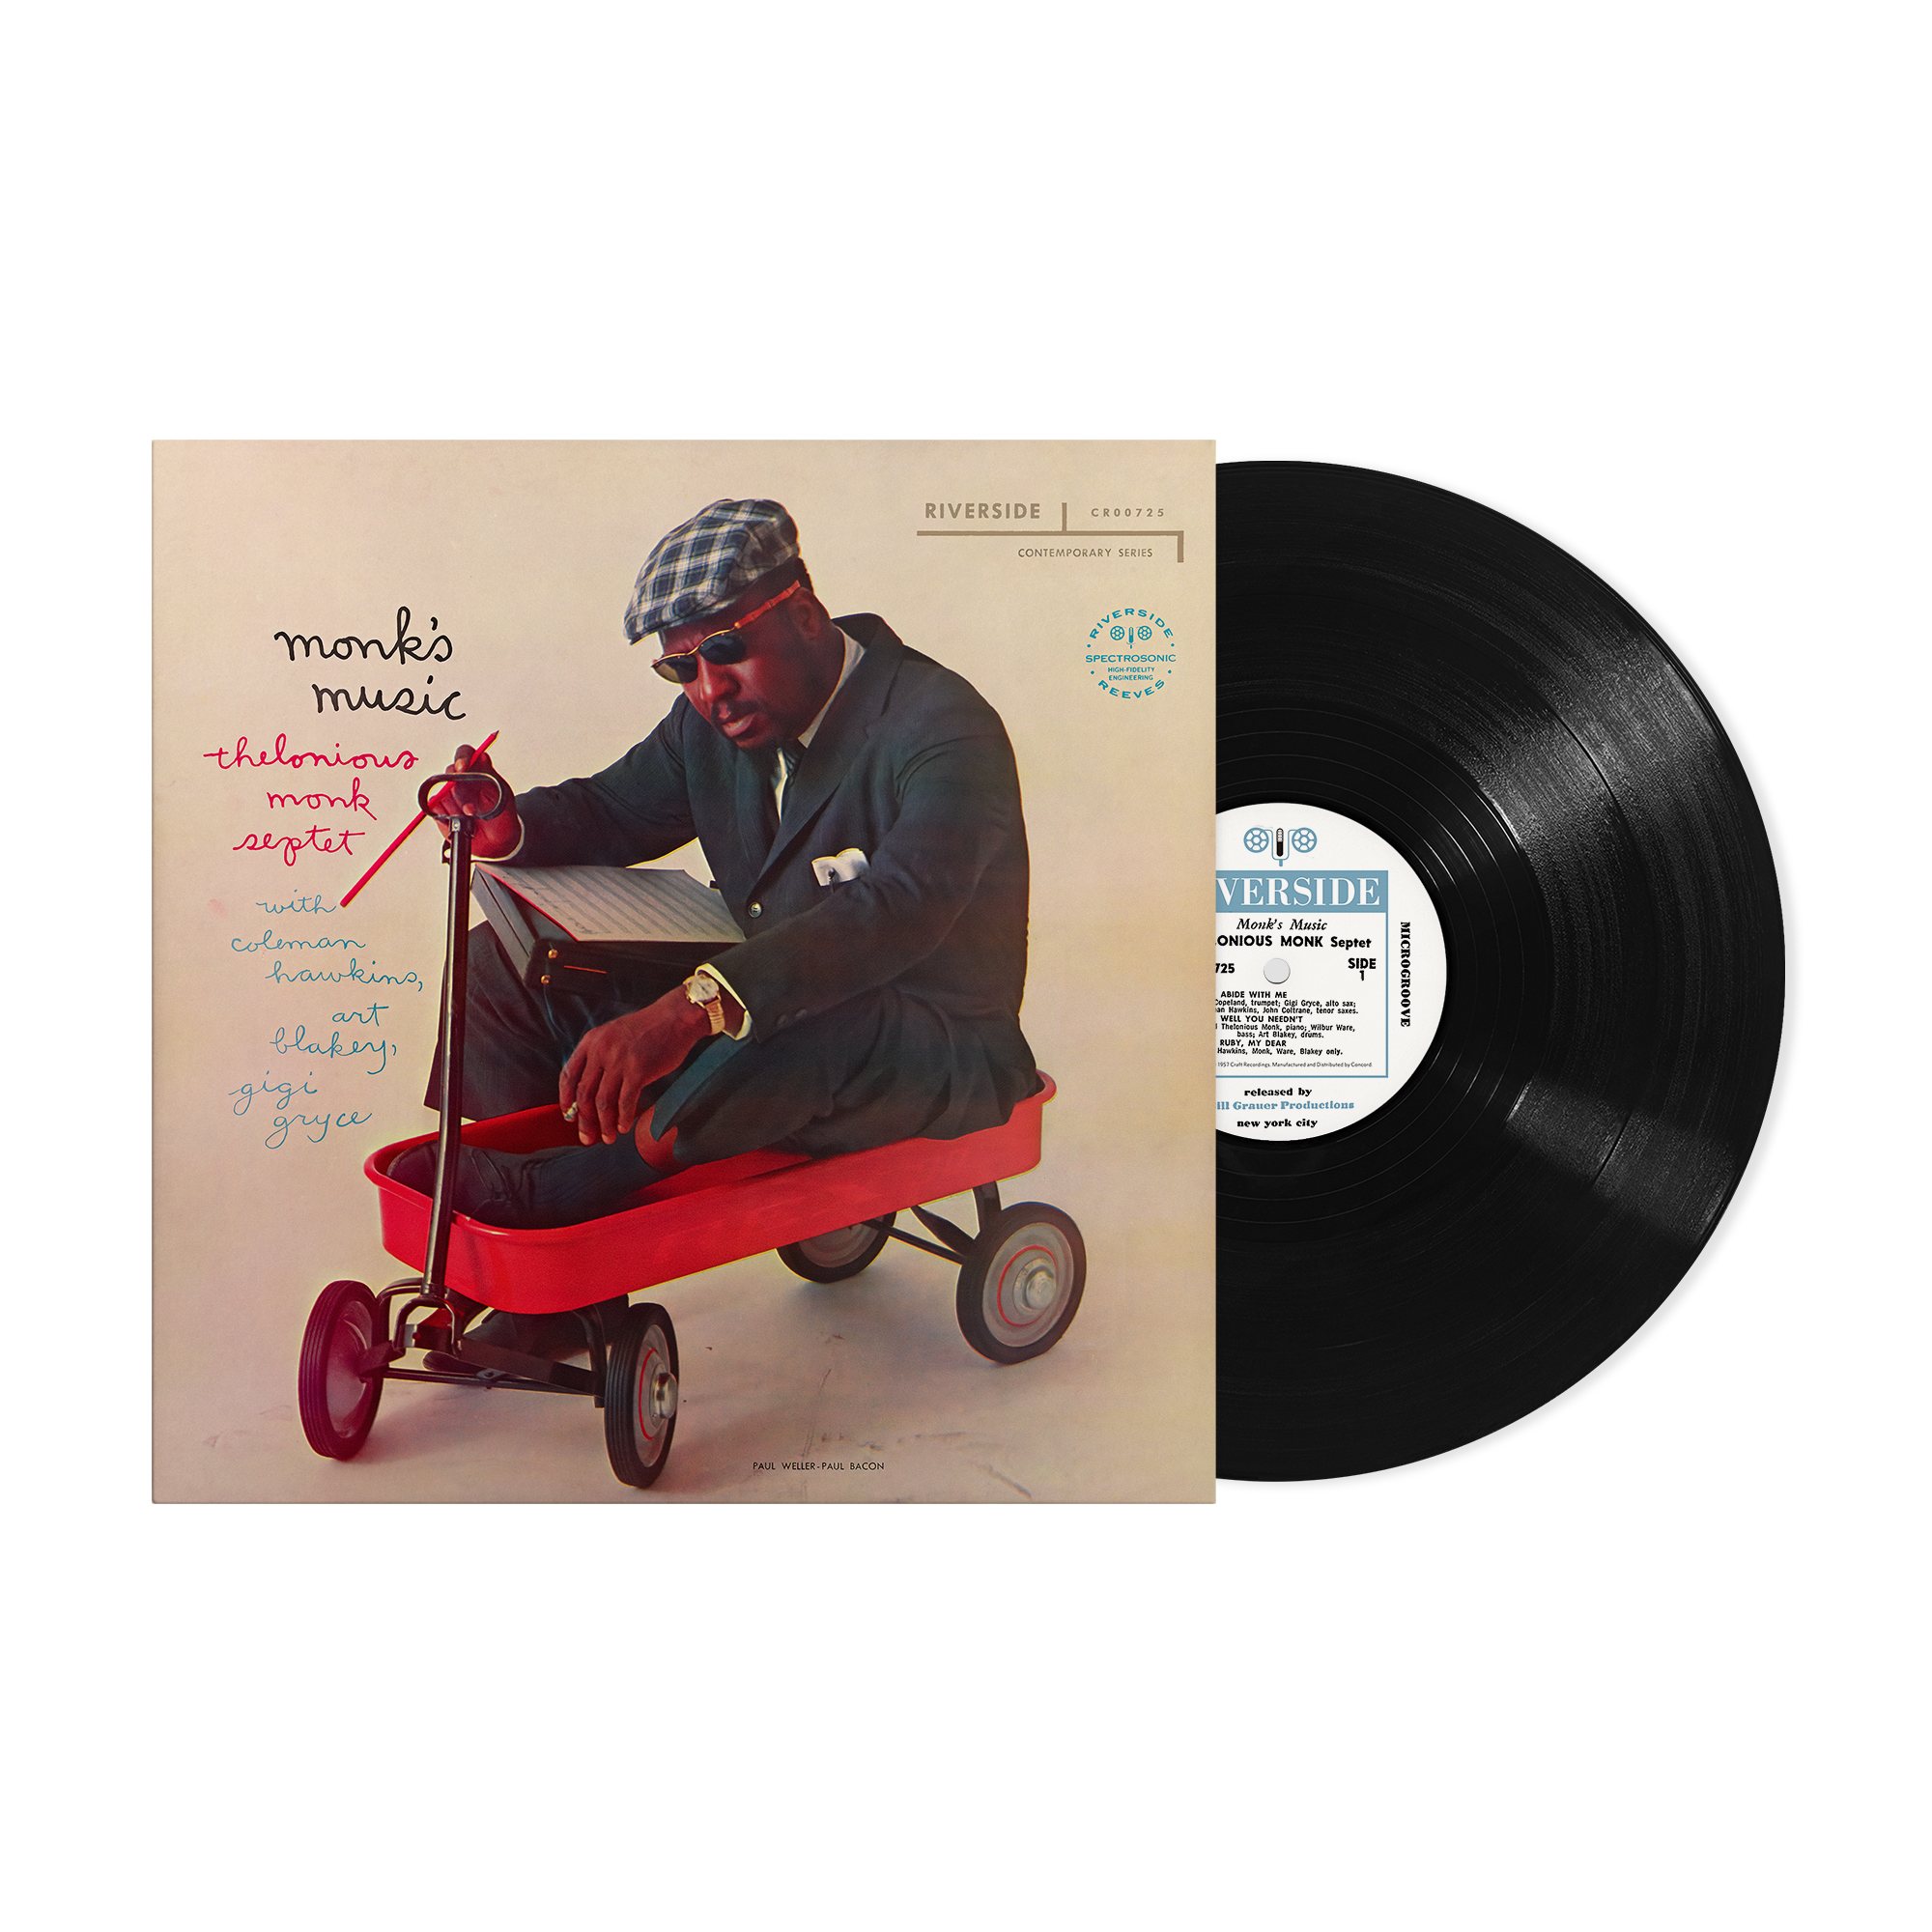 Thelonious Monk Septet - Monk’s Music (Original Jazz Classics Series): 1LP